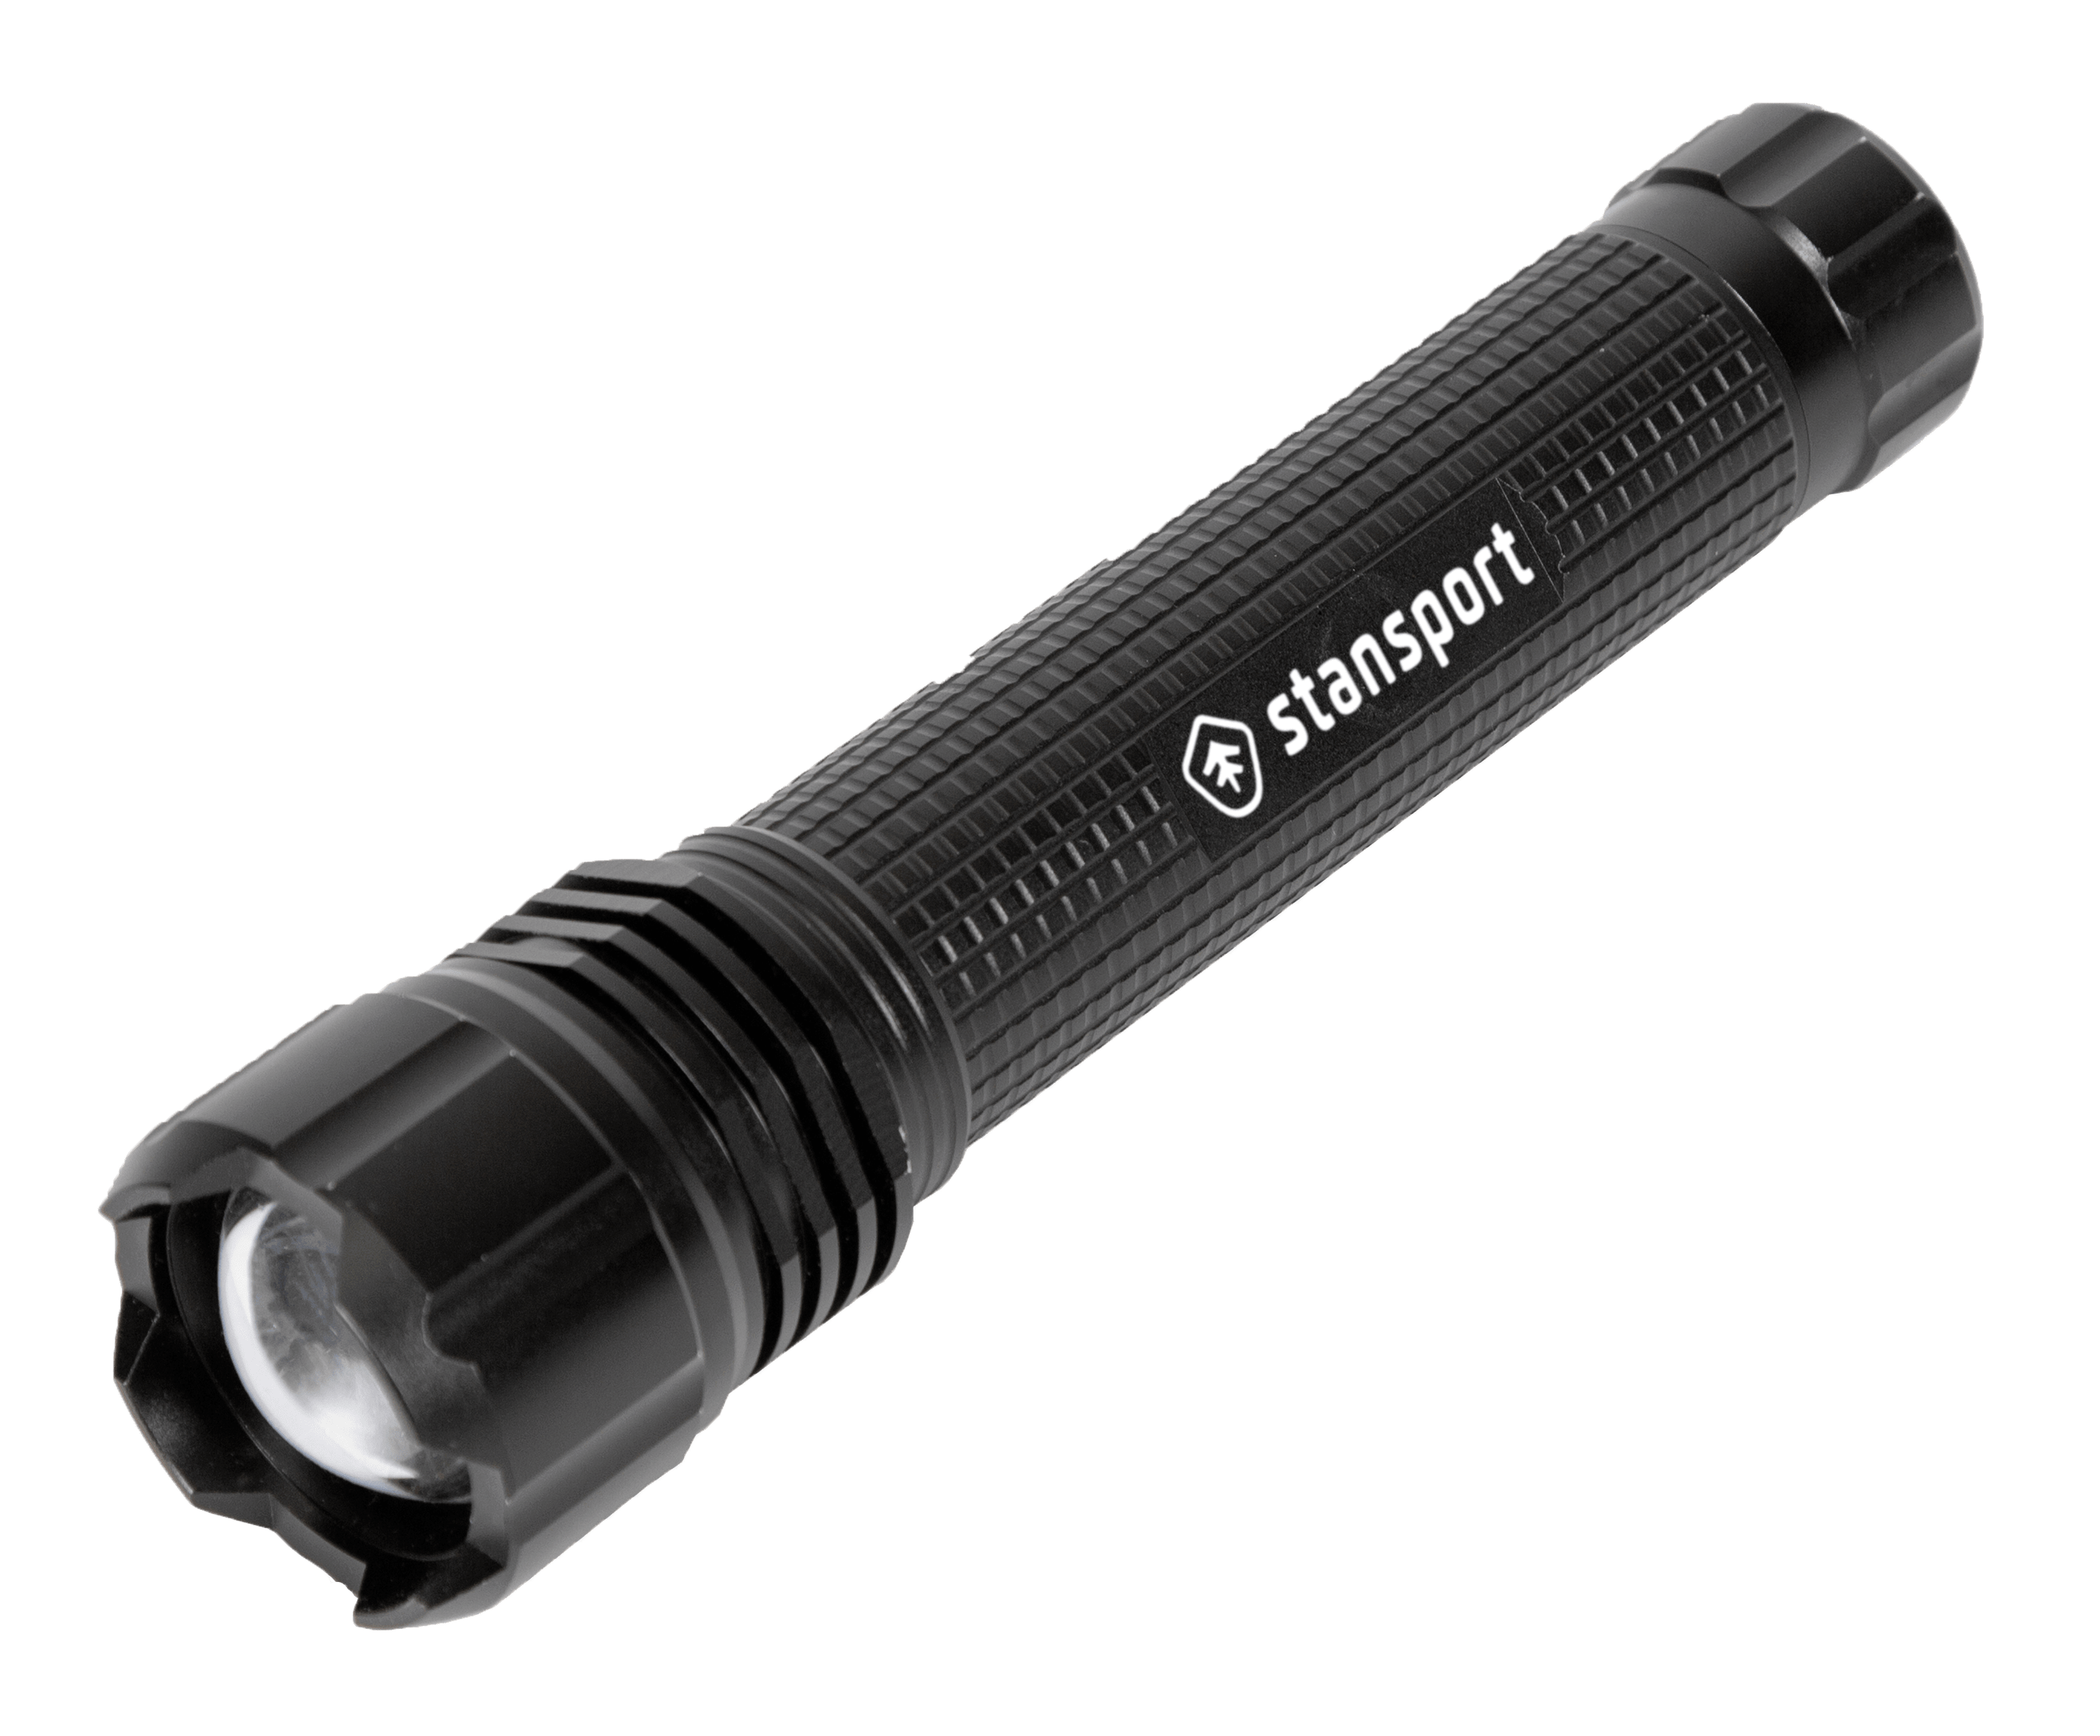 Stansport 500 Lumens Heavy-Duty Tactical Flashlight